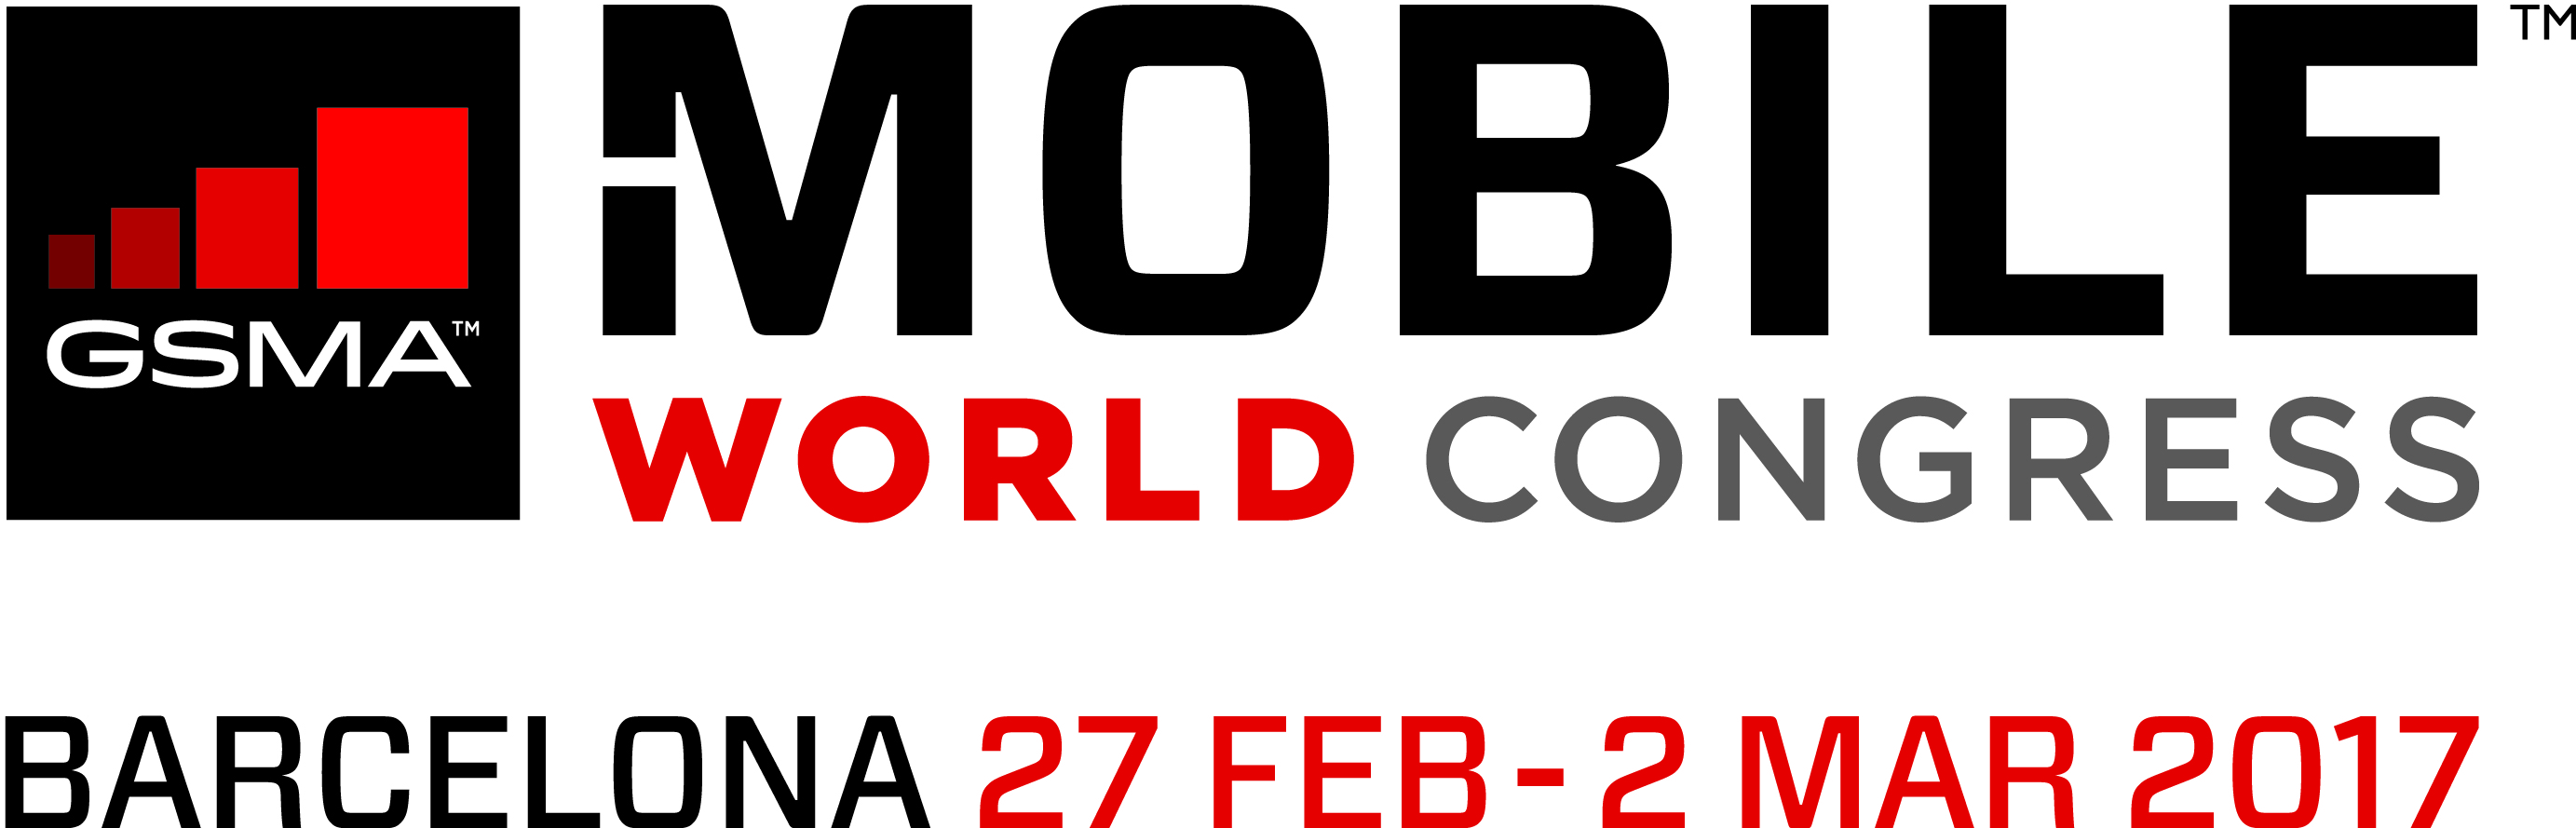 invokers at Mobile World Congress i Barcelona - February 2017